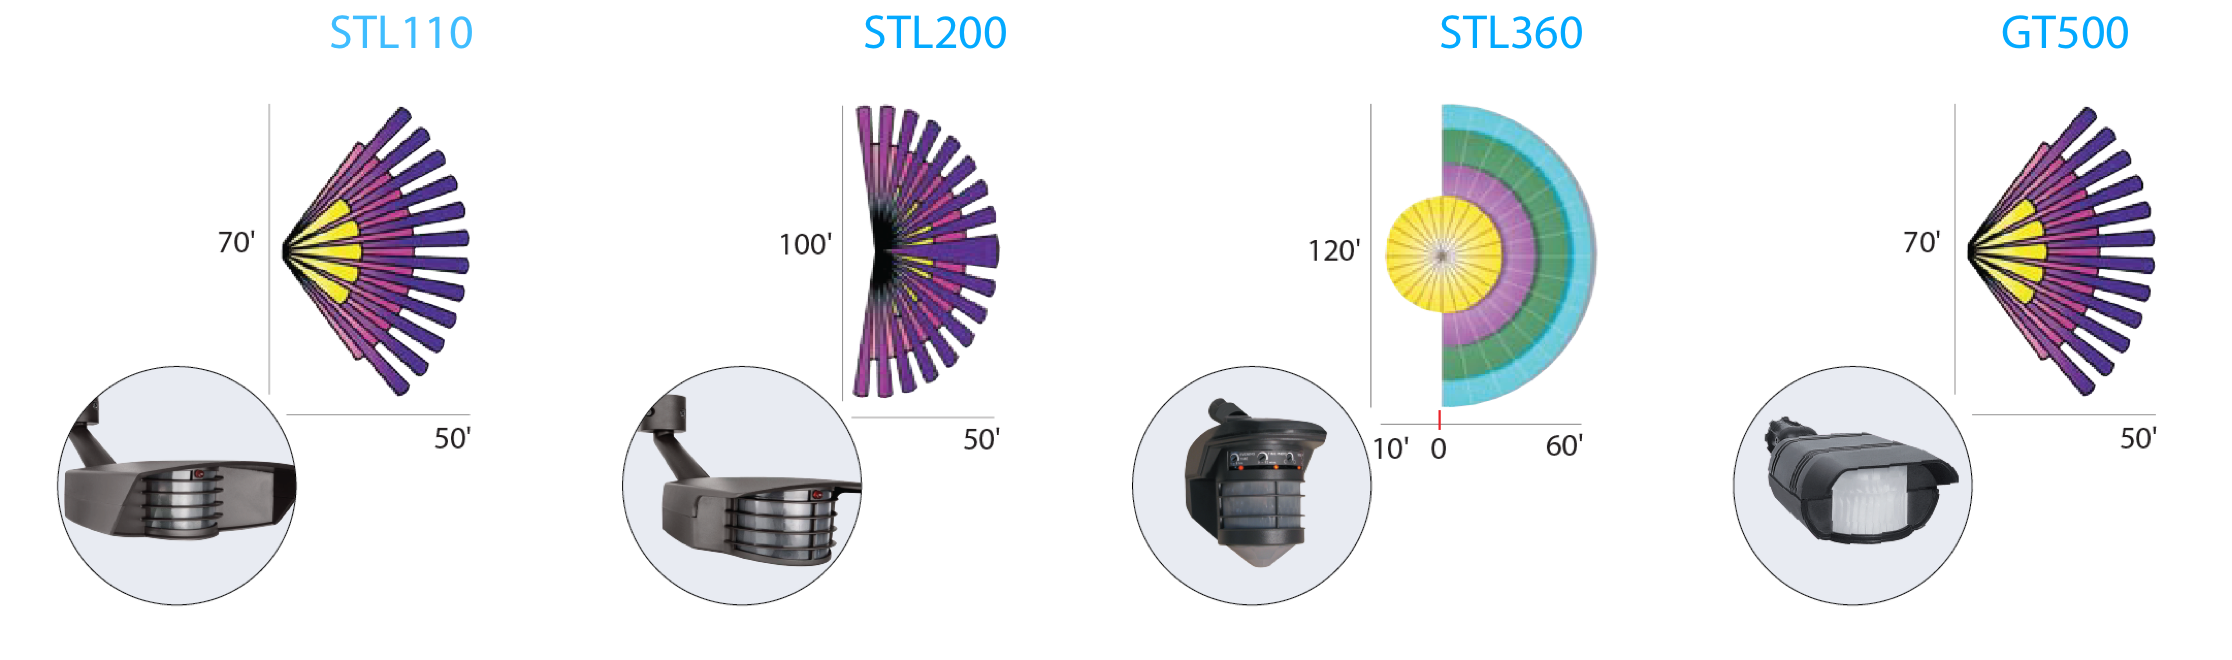 Motion Sensor Options - STL110, STL200, STL360,  ST500